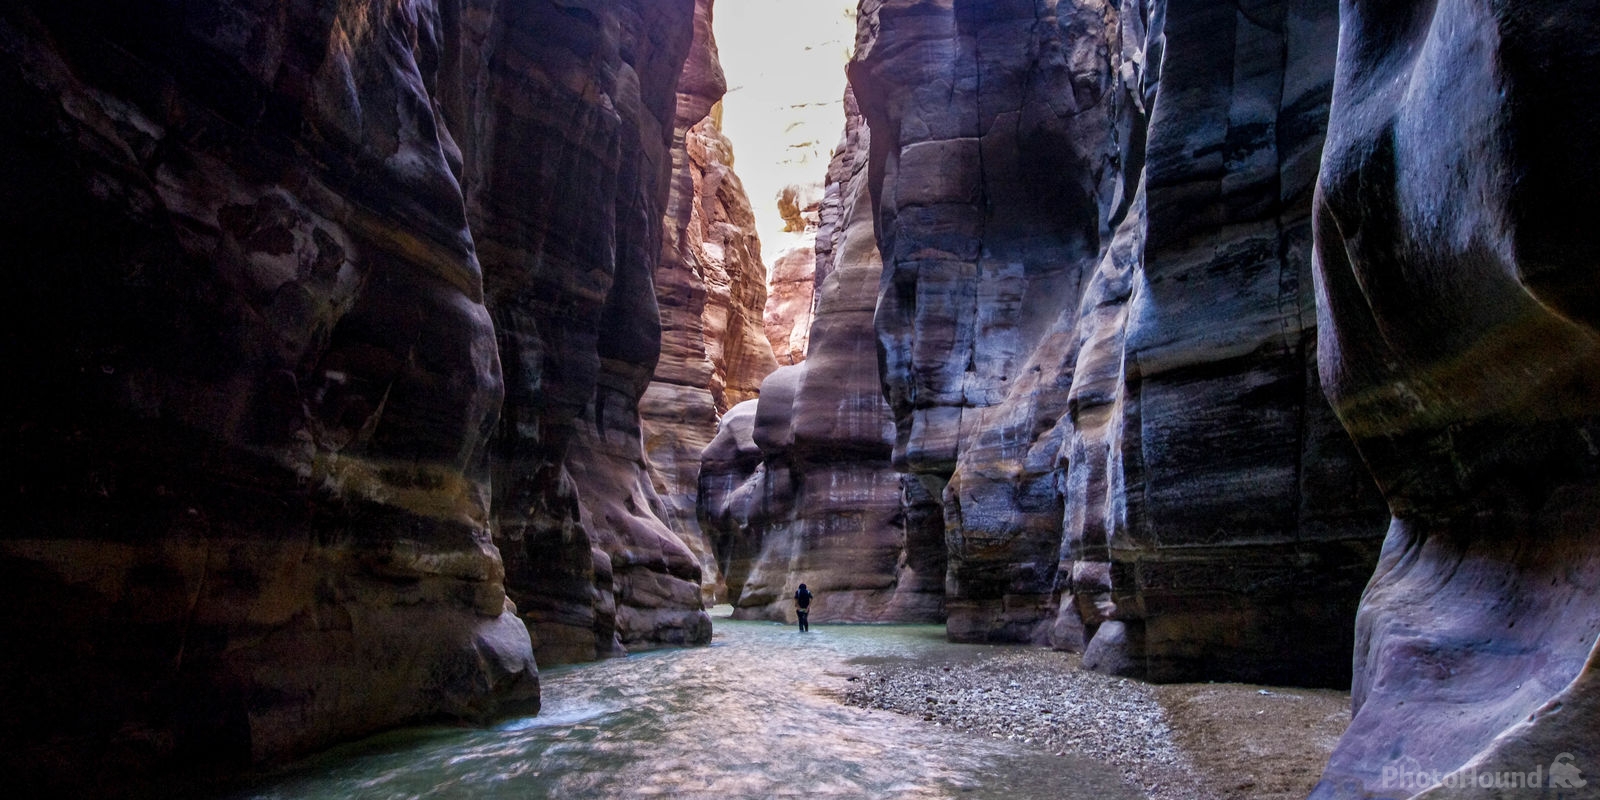 Image of Wadi al Mujib Siq by Wayne & Lyn Liebelt